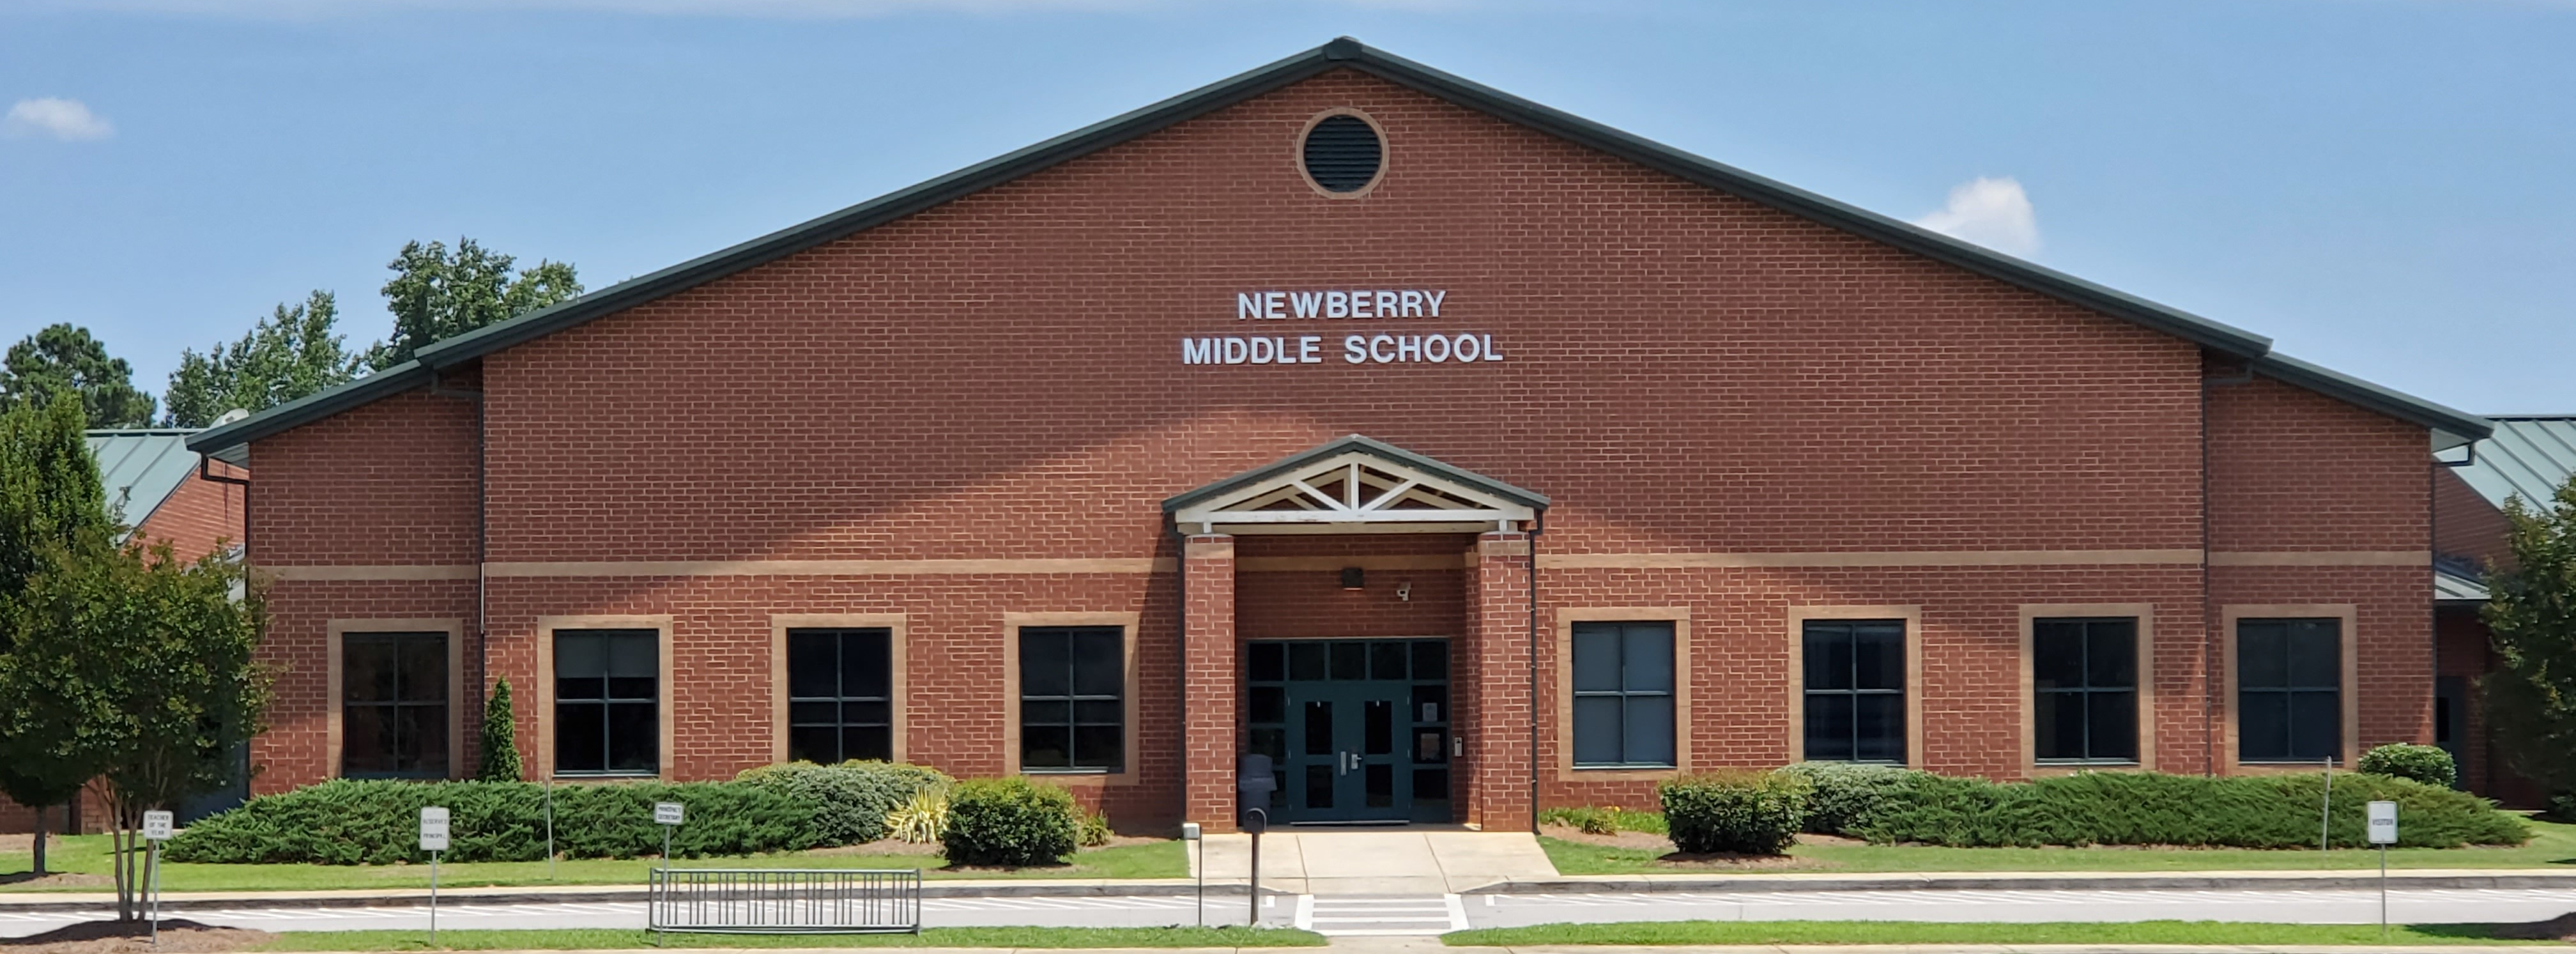 Newberry Middle School